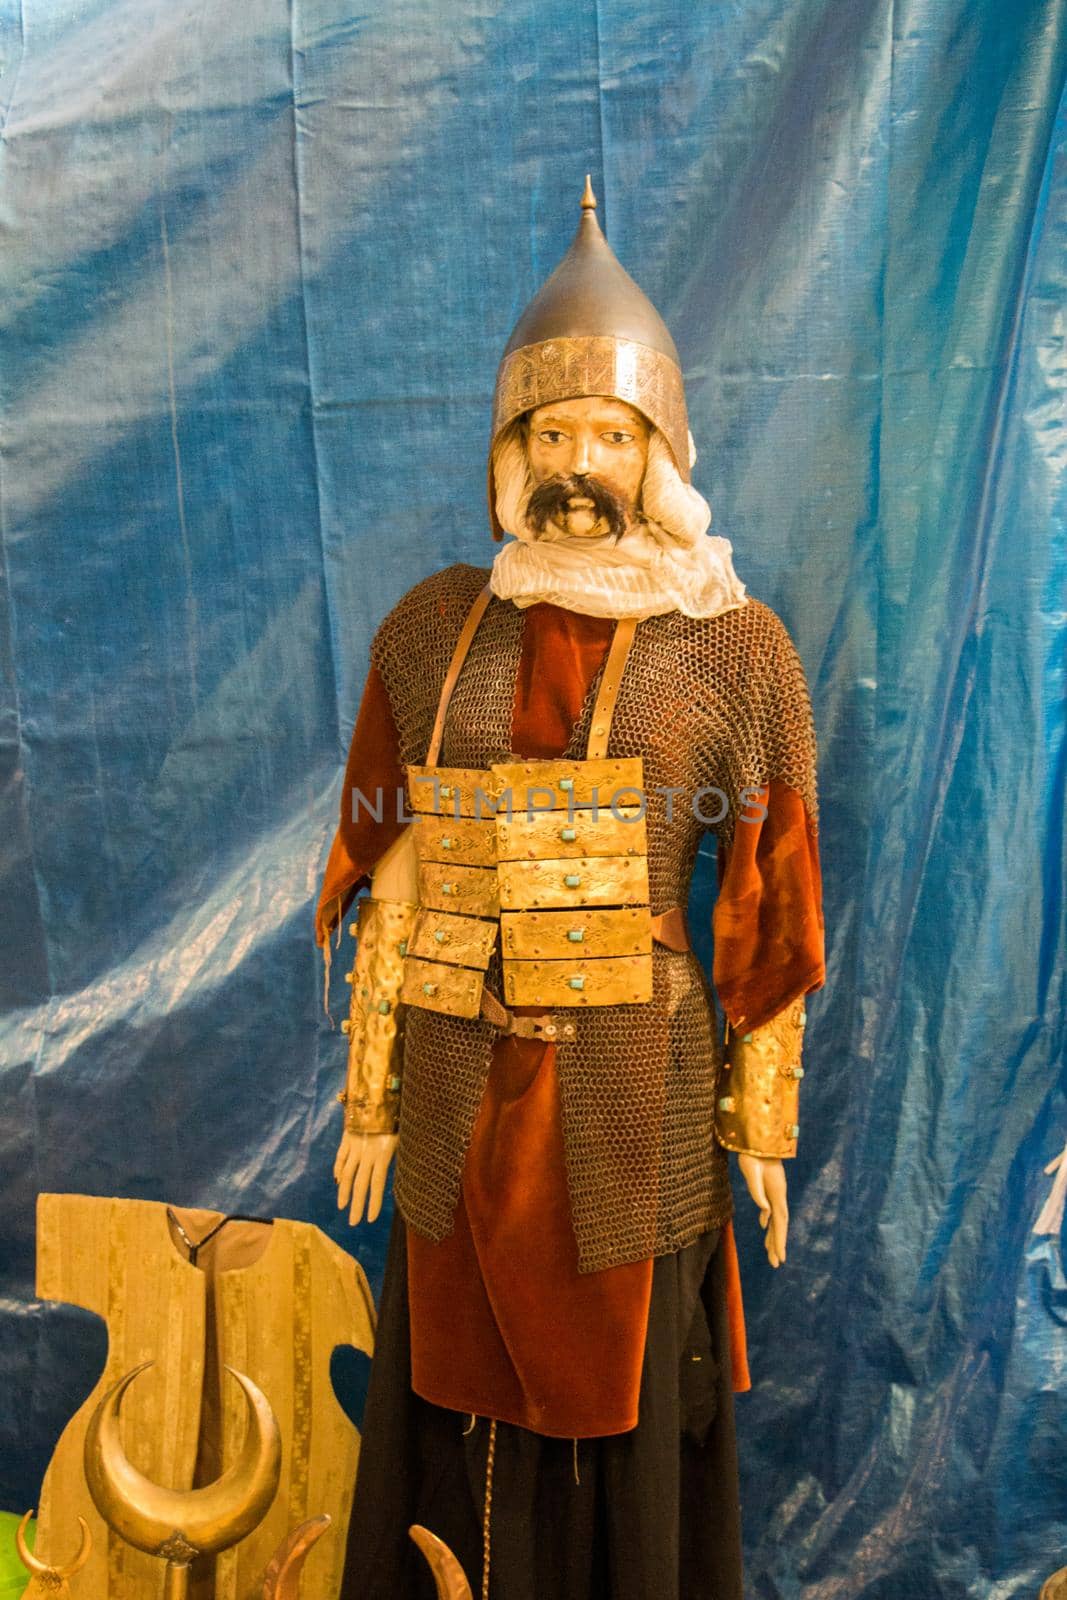 Ottoman style armor on human figure on display by berkay